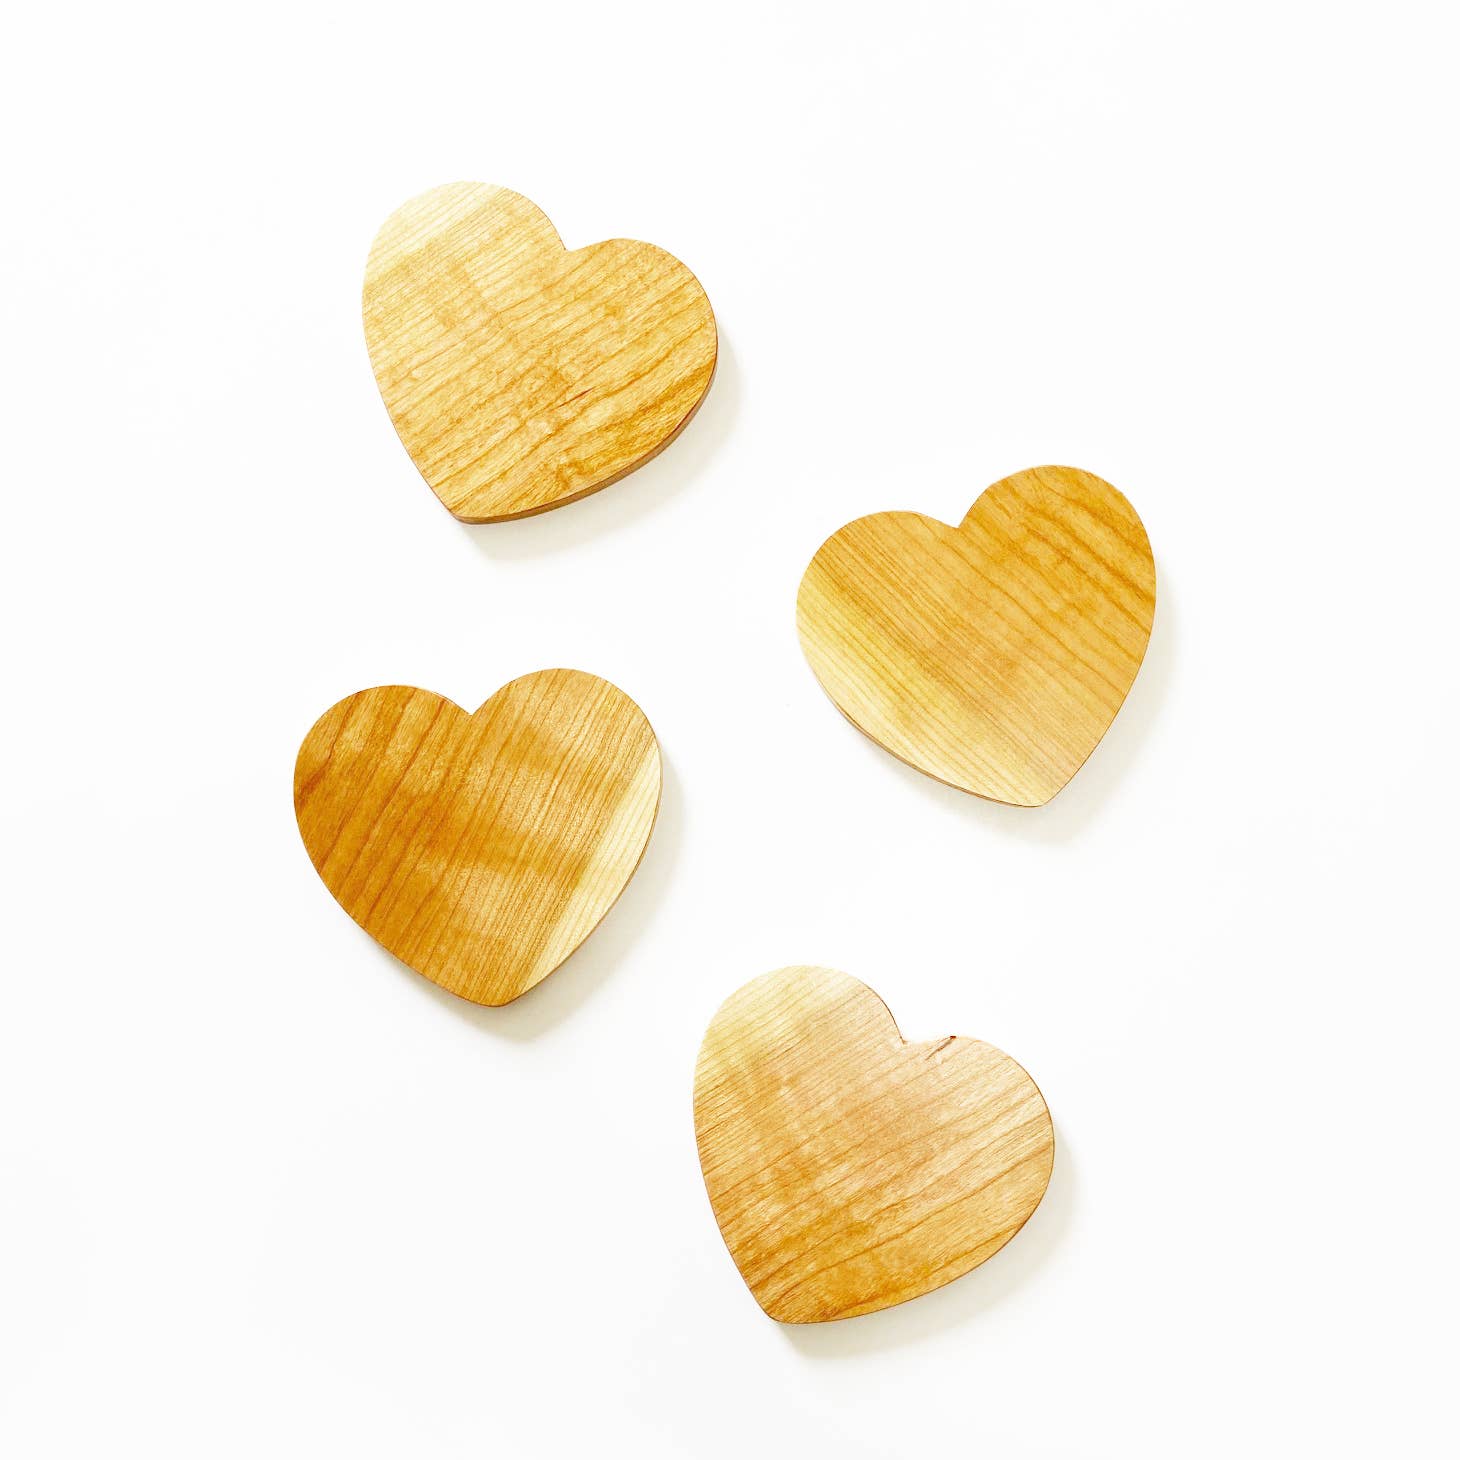 4 pc Handmade Wooden Coasters - Heart